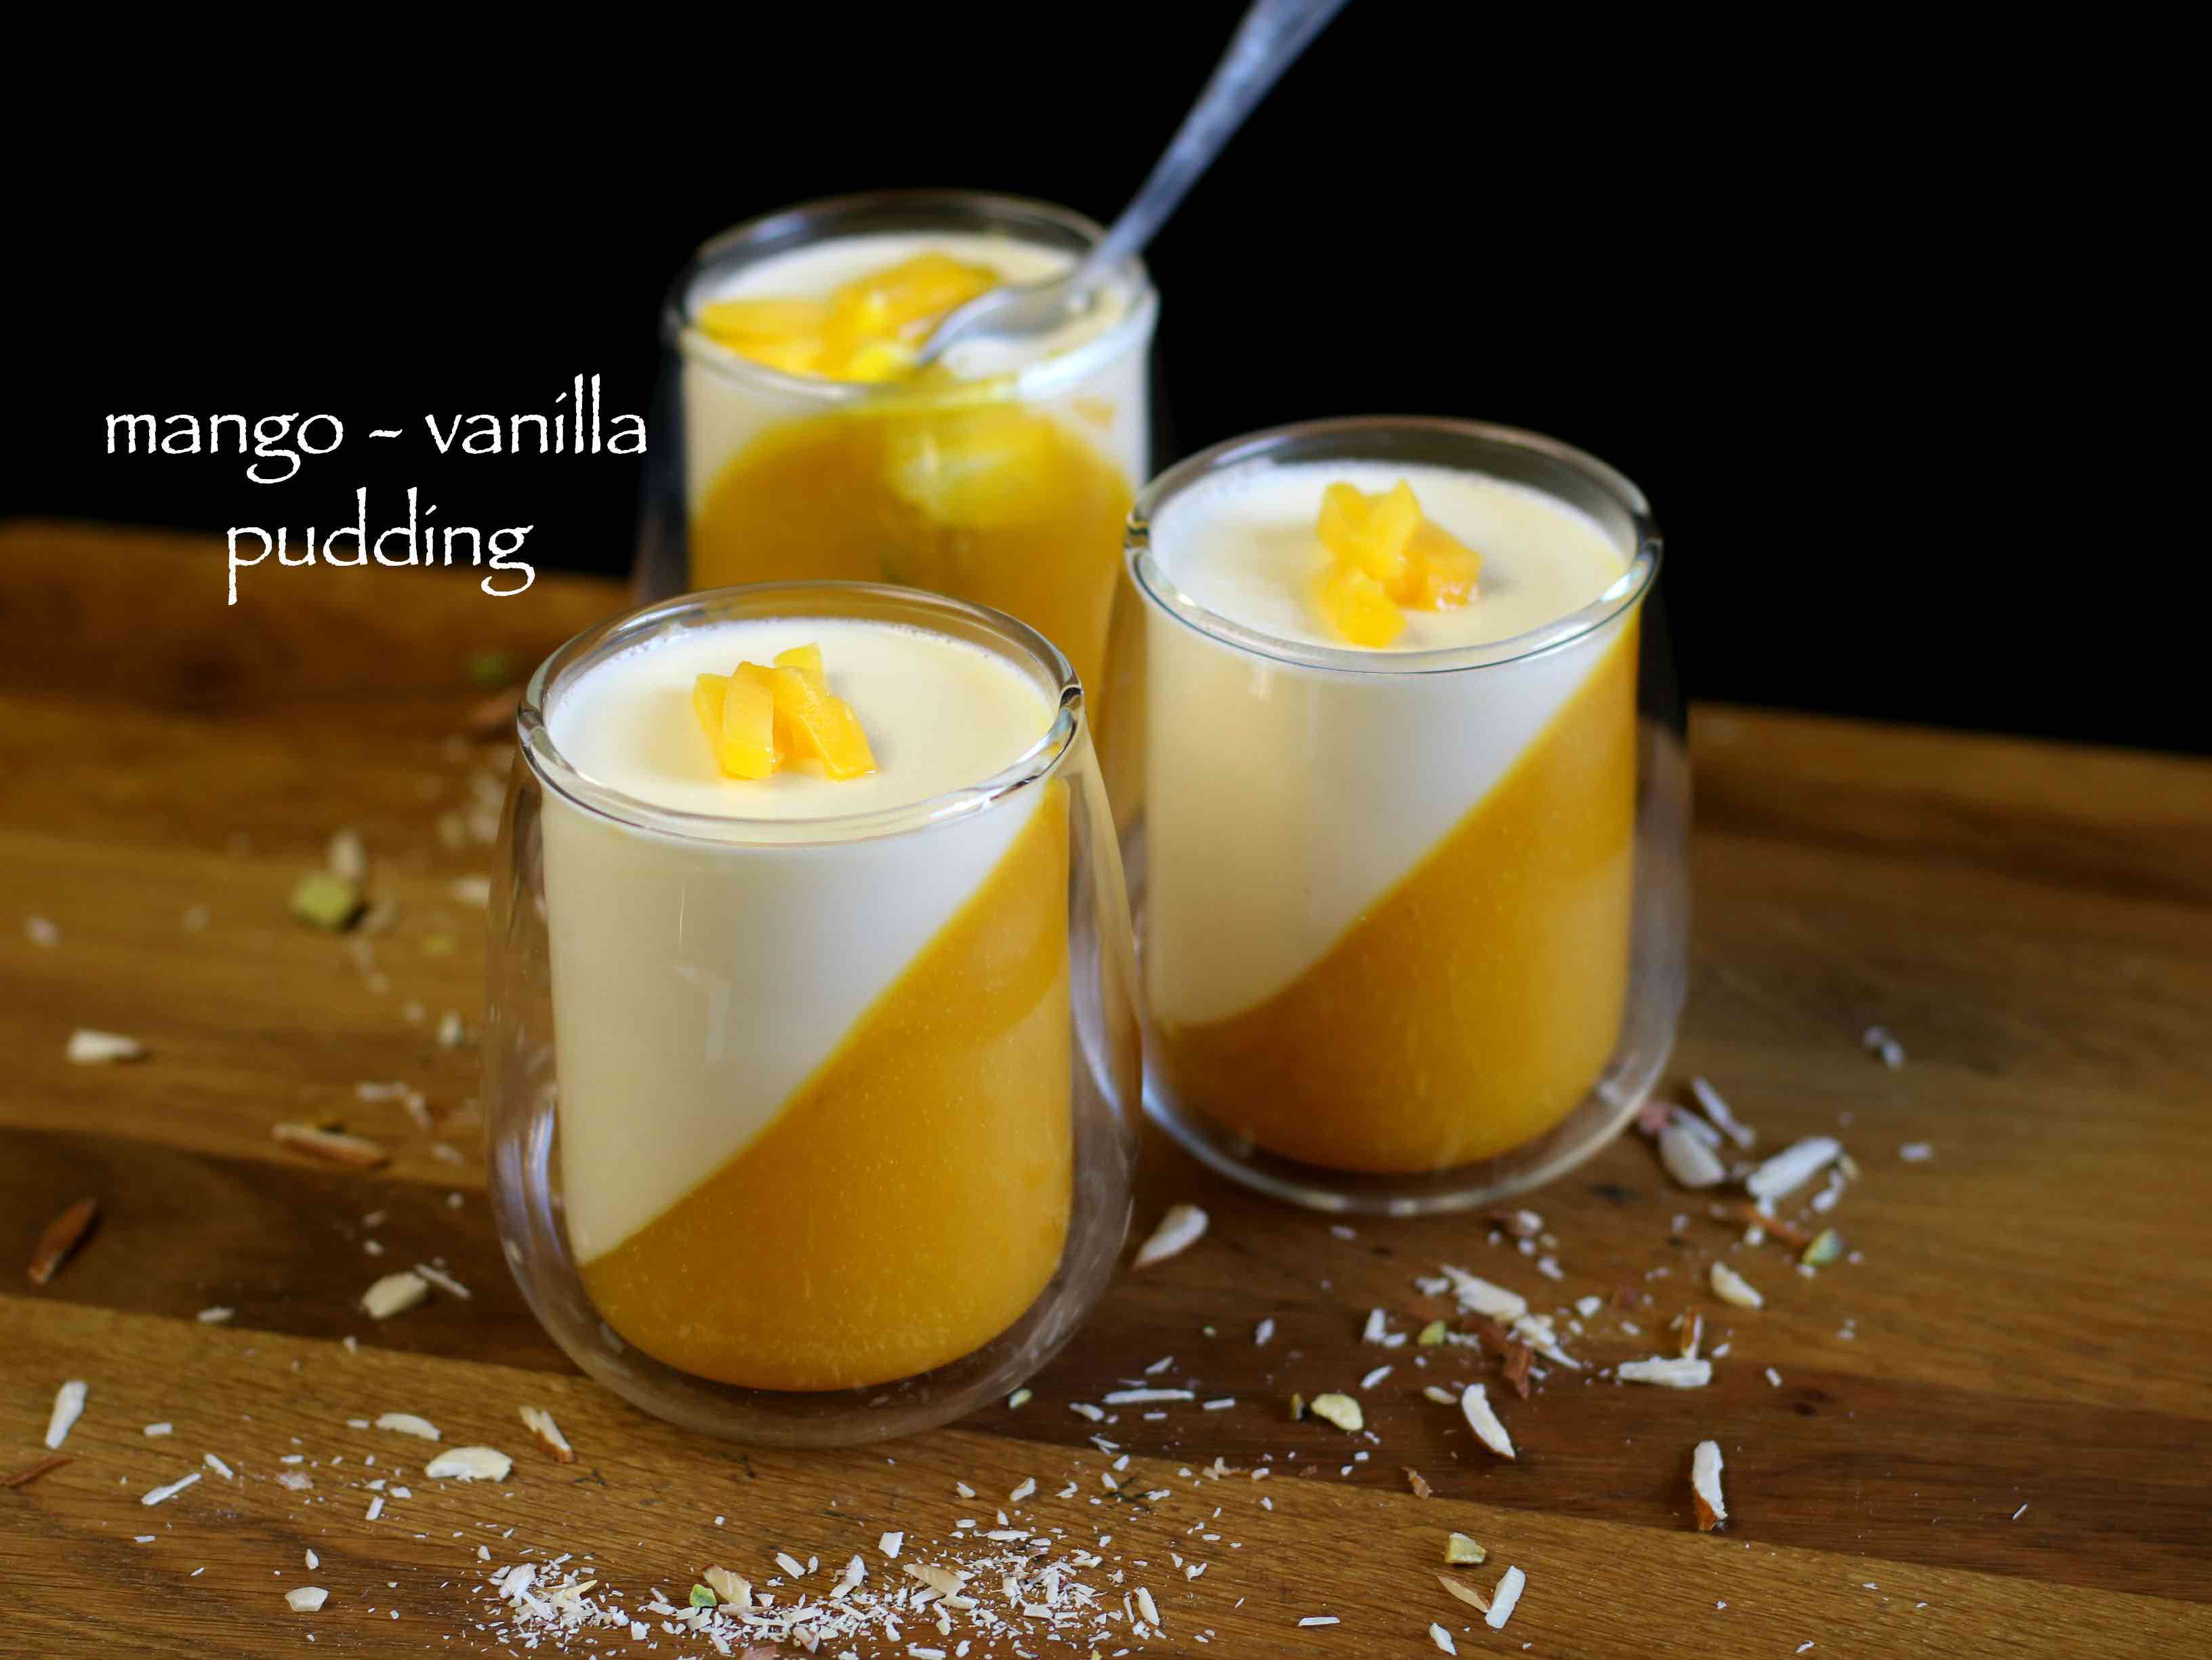 mango pudding recipe | mango pudding dessert | mango panna cotta